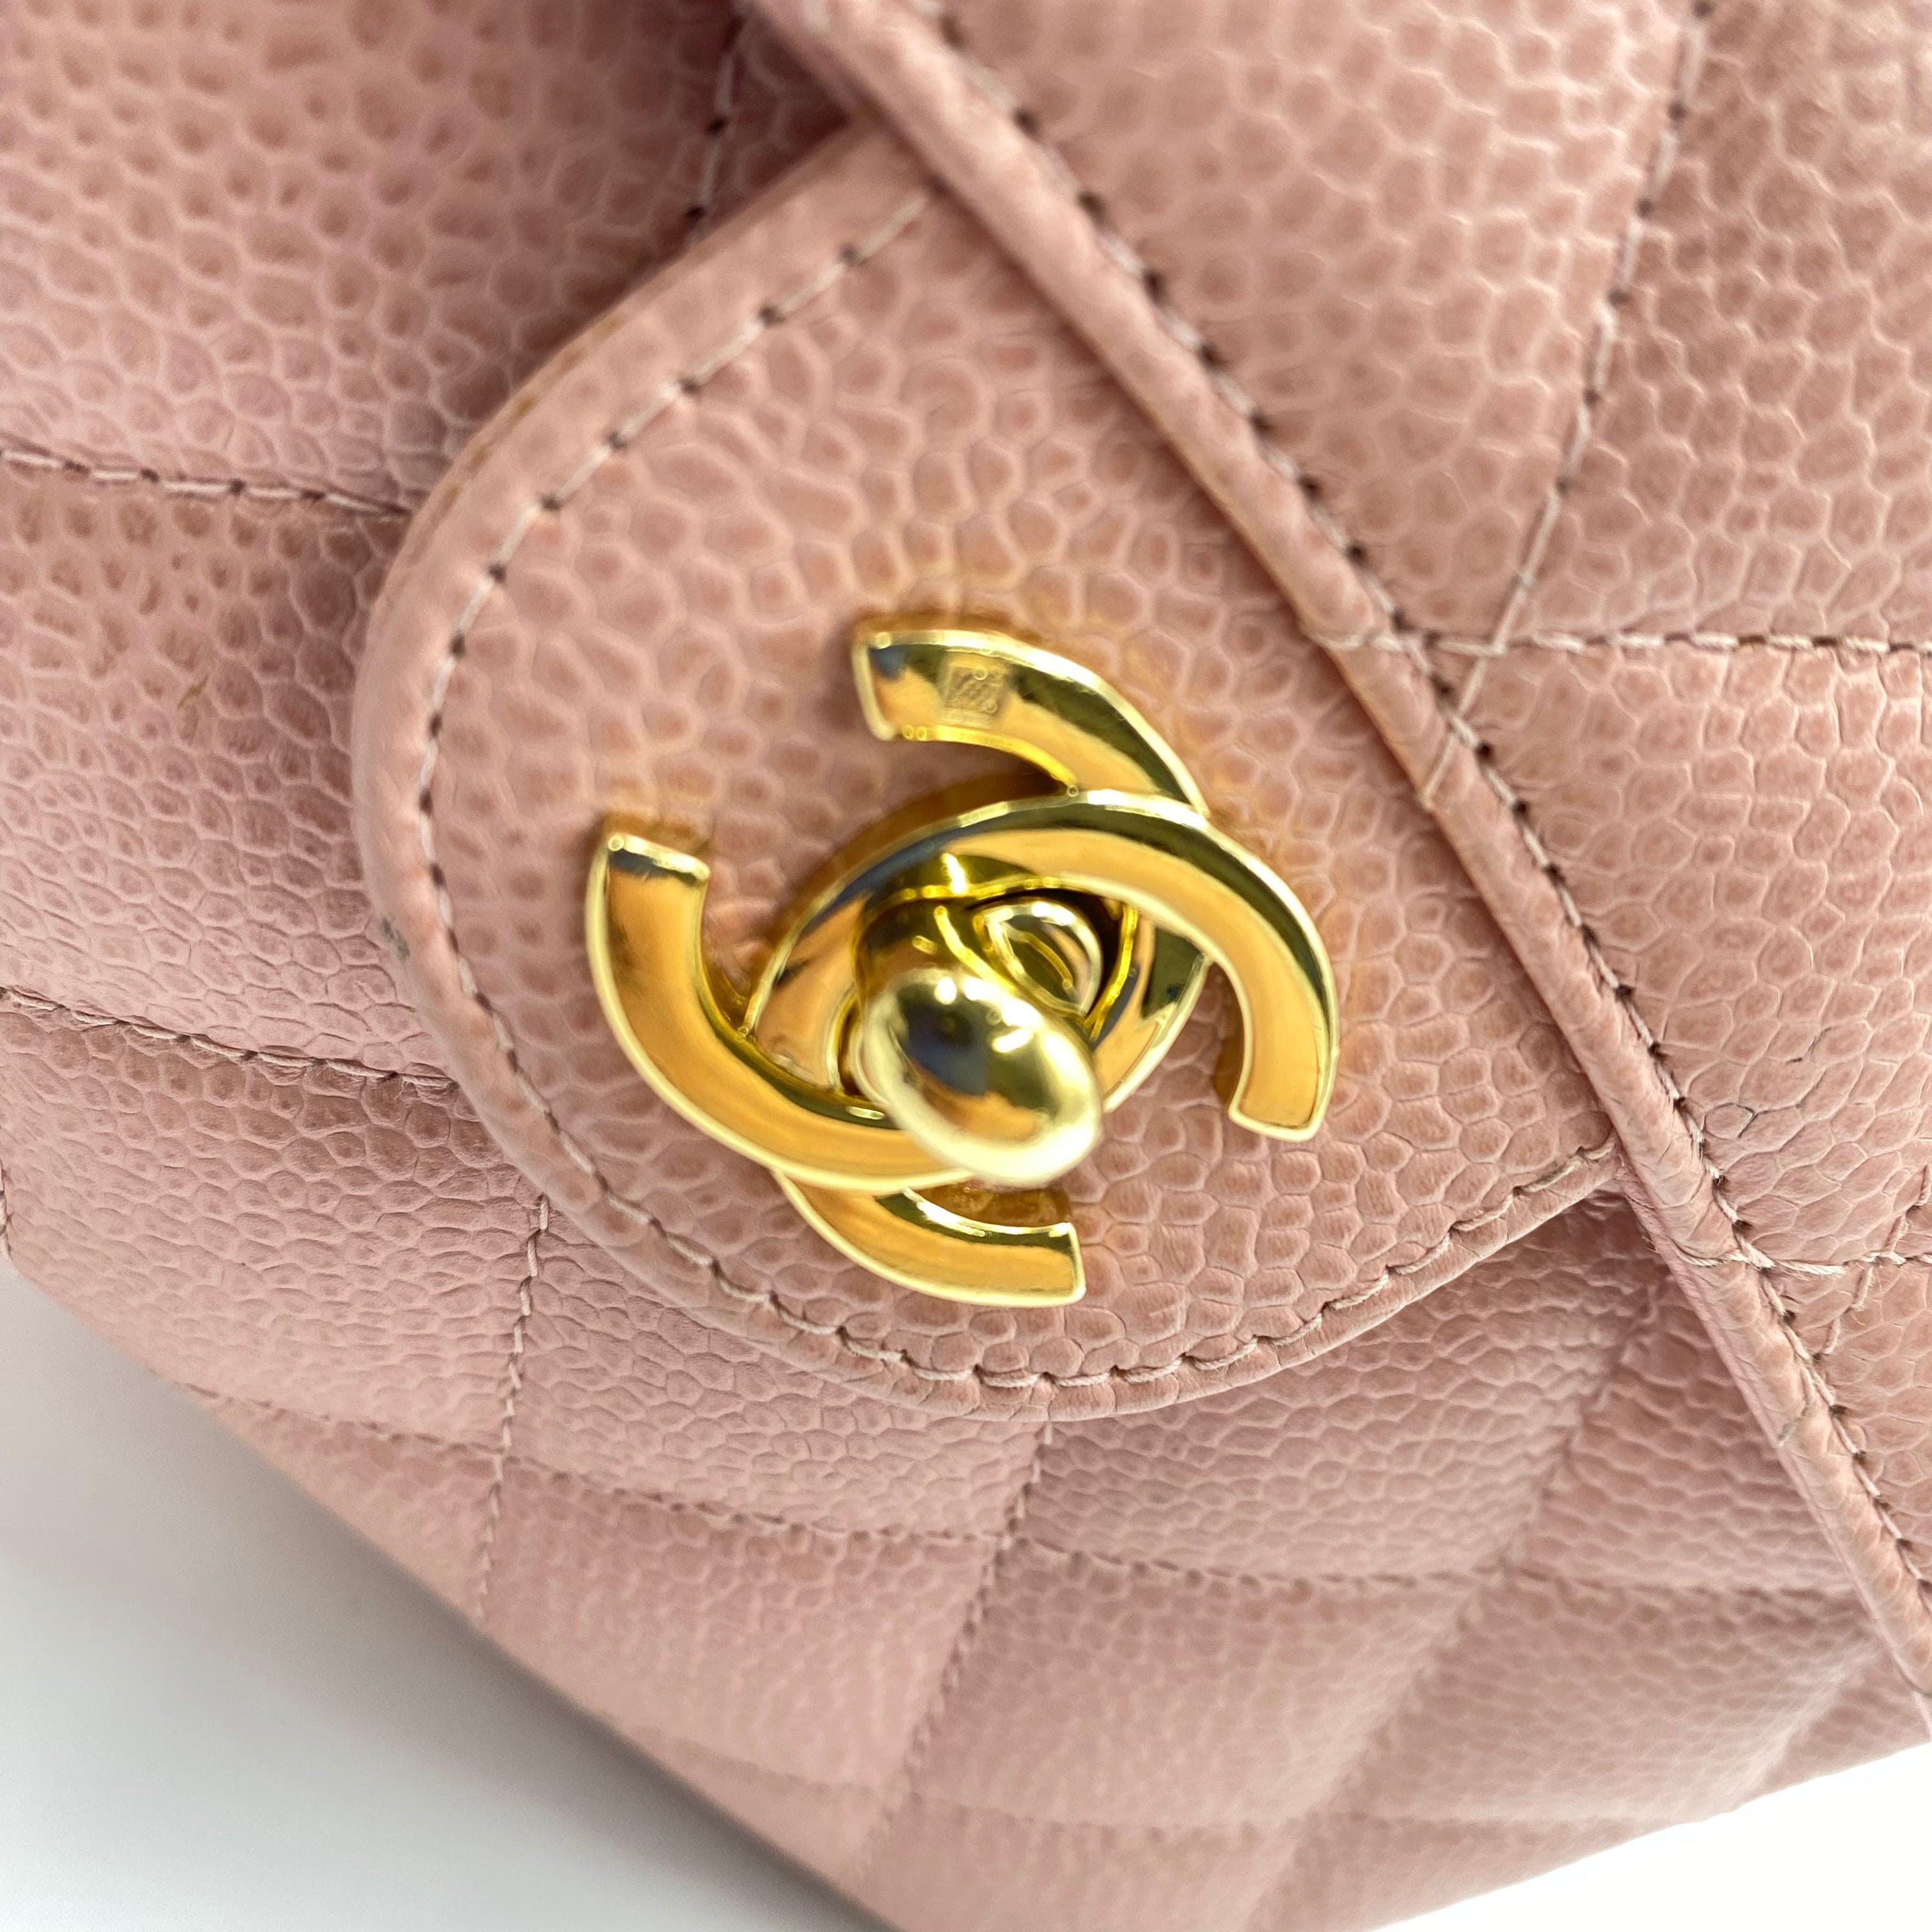 Chanel CHANEL VINTAGE MINI SQUARE 17 CHAIN SHOULDER BAG PINK CAVIAR SKIN 90216497